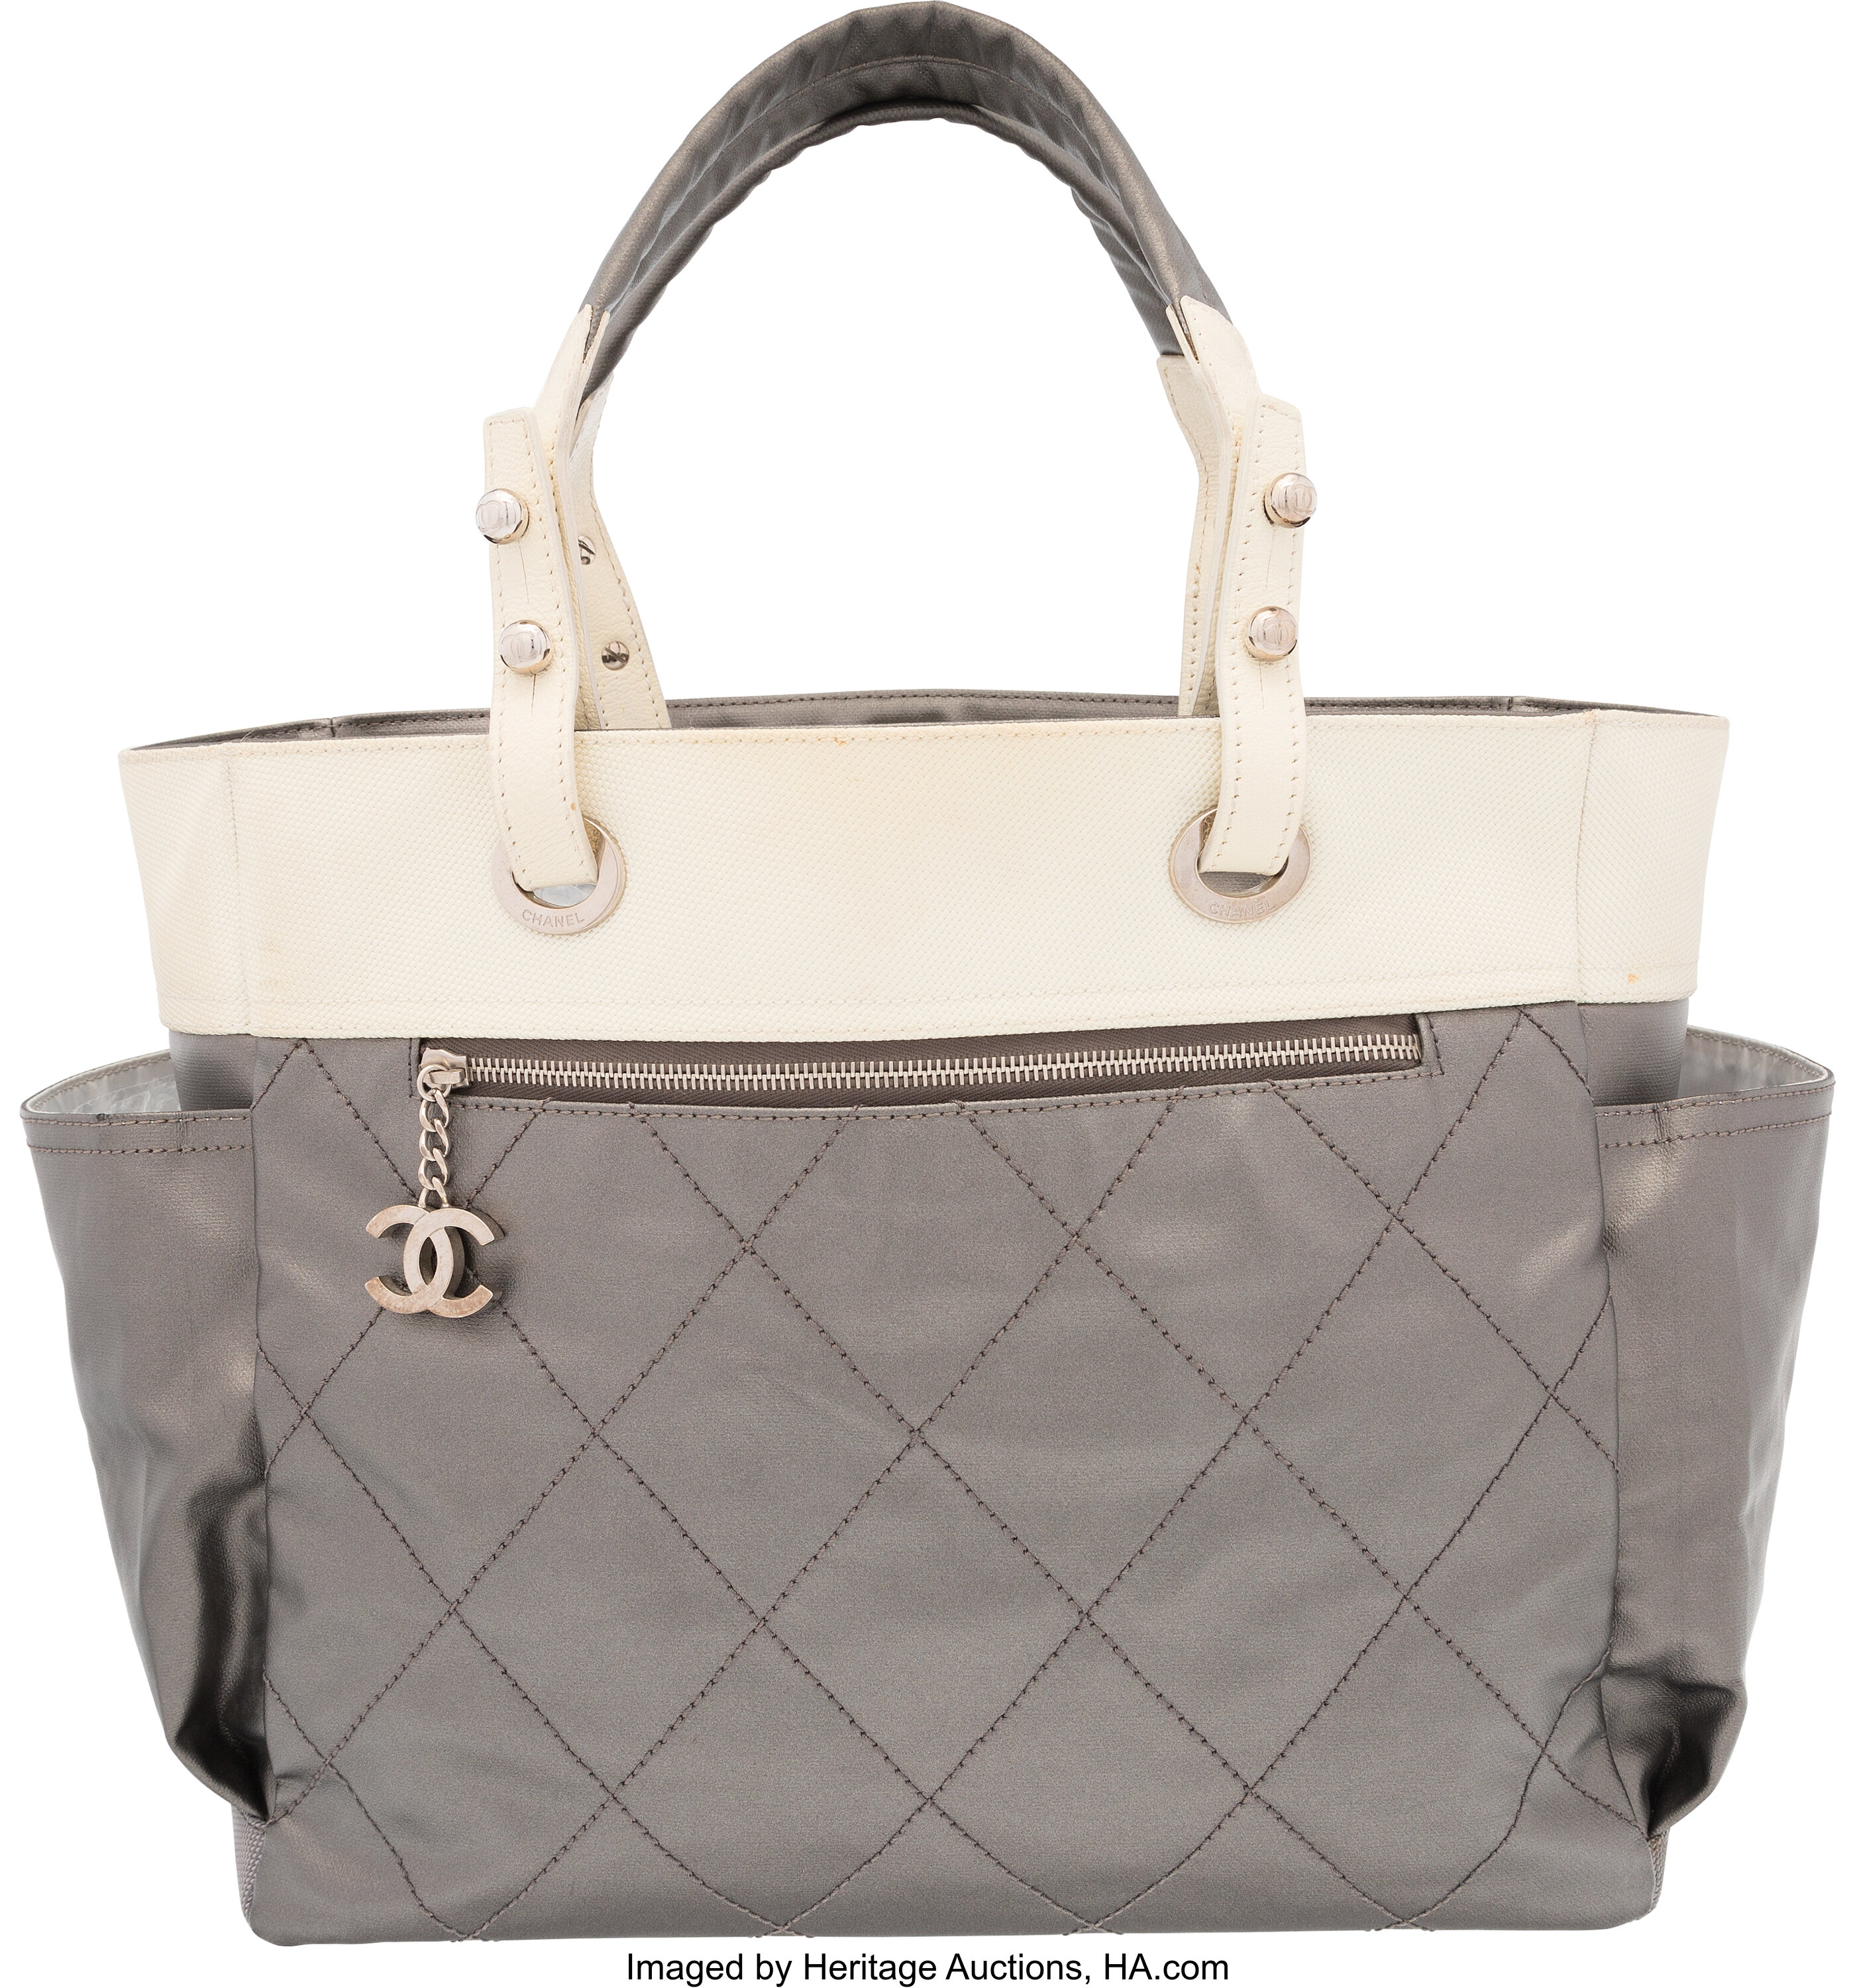 Chanel Gray & White Canvas Paris-Biarritz Tote Bag. Very Good, Lot #58019